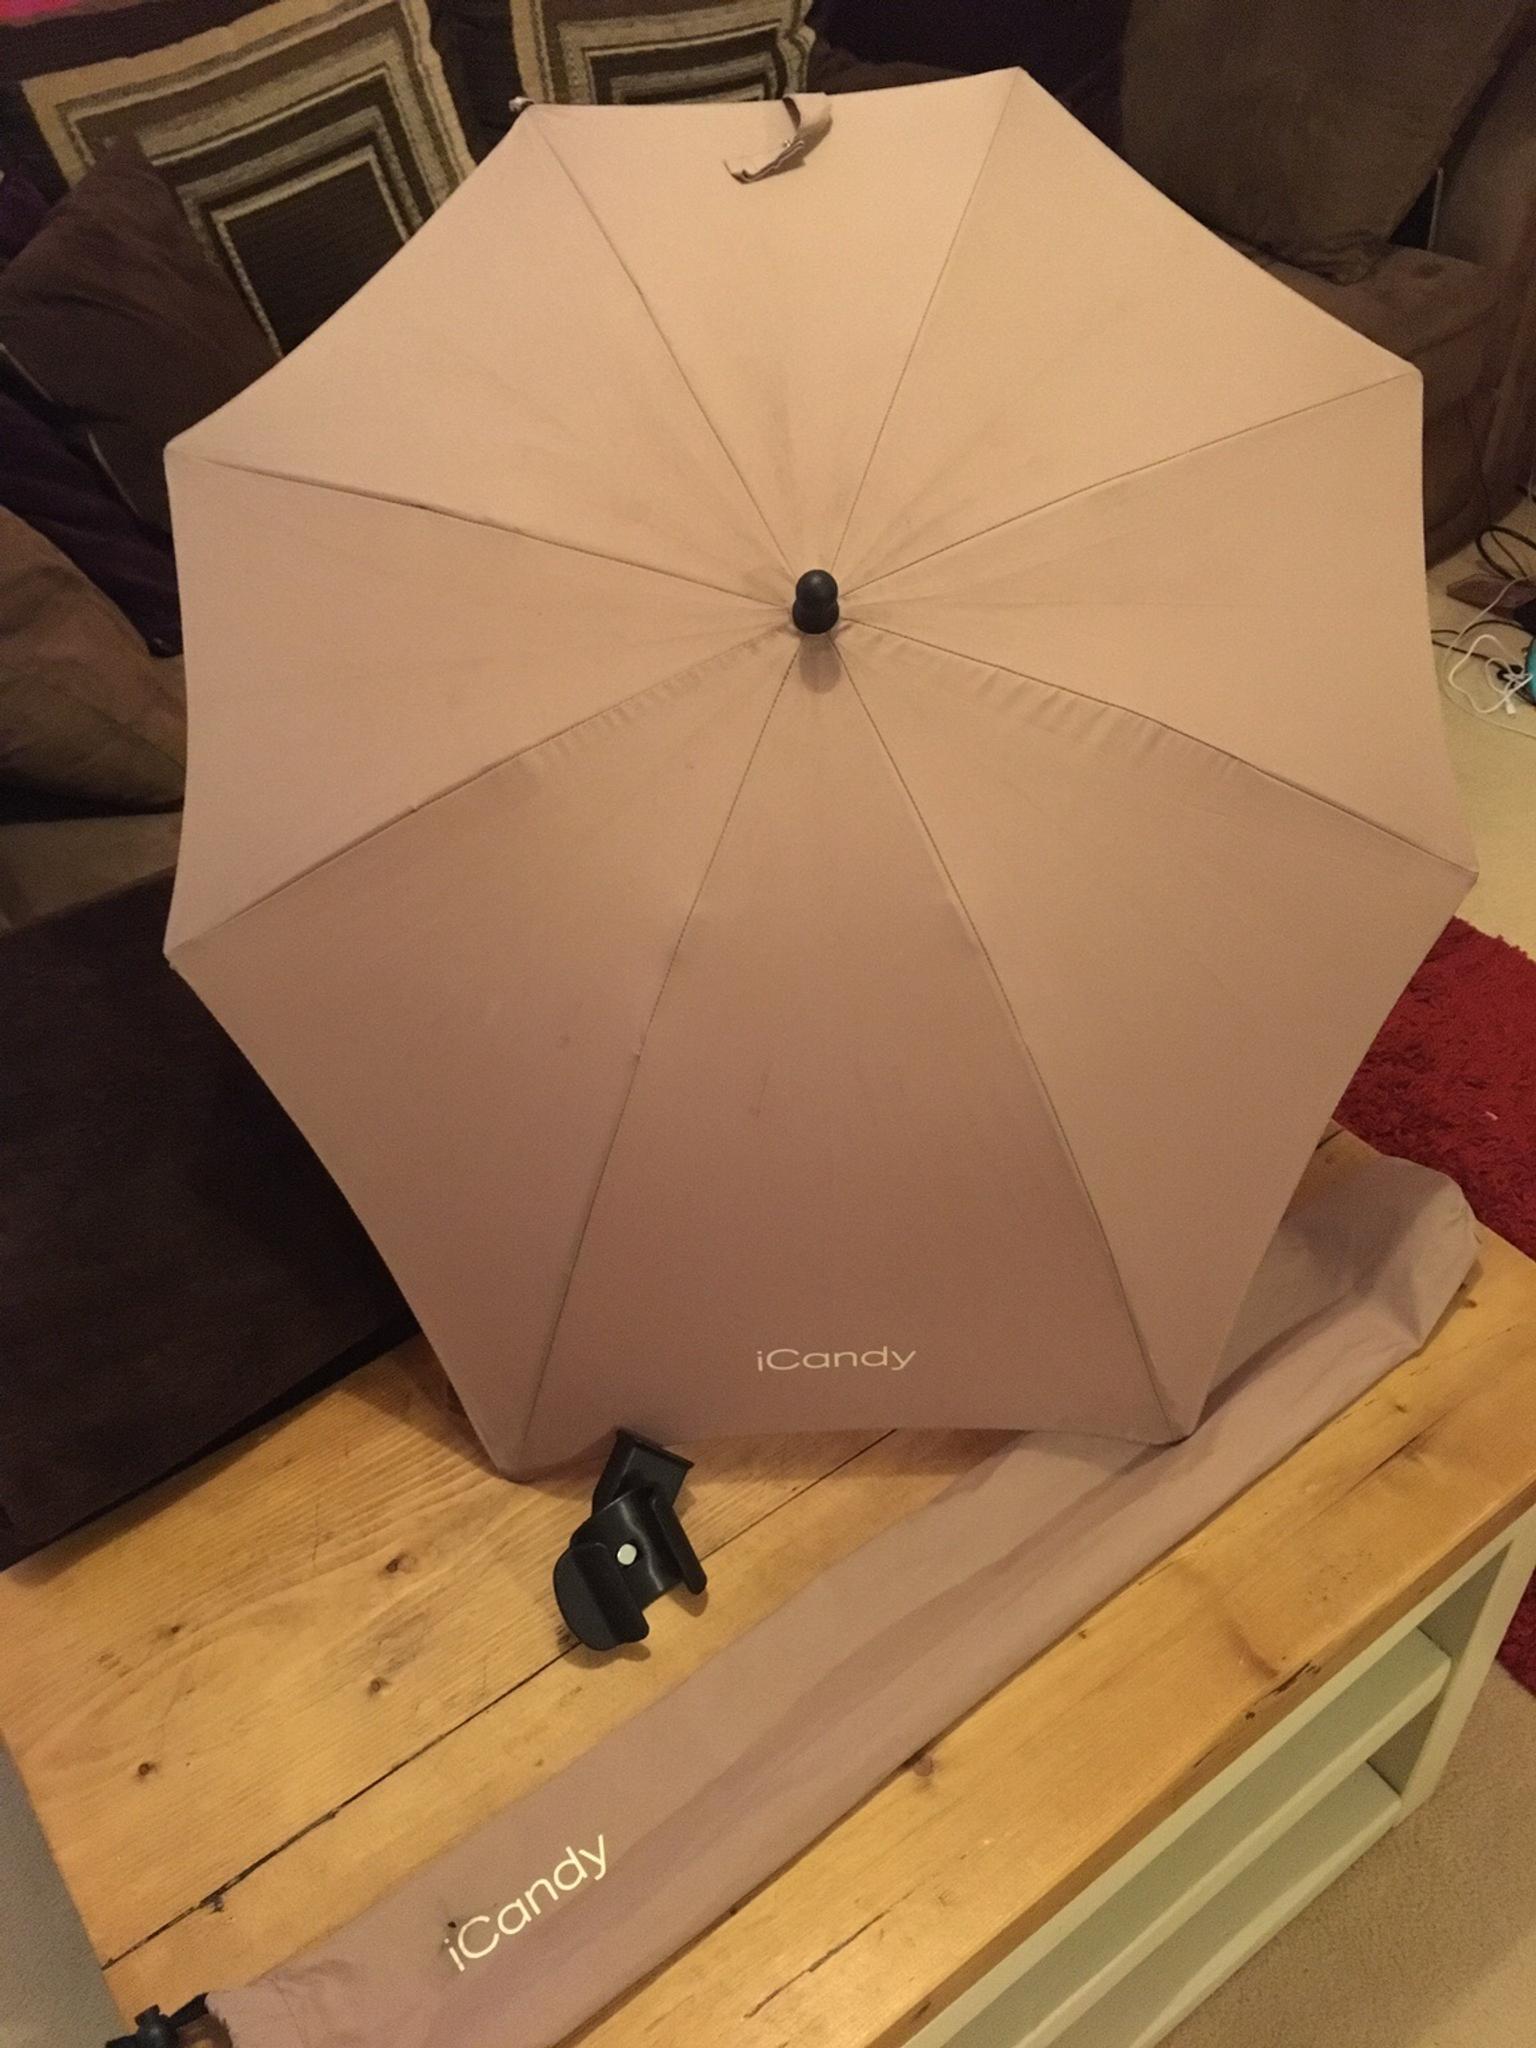 icandy peach umbrella